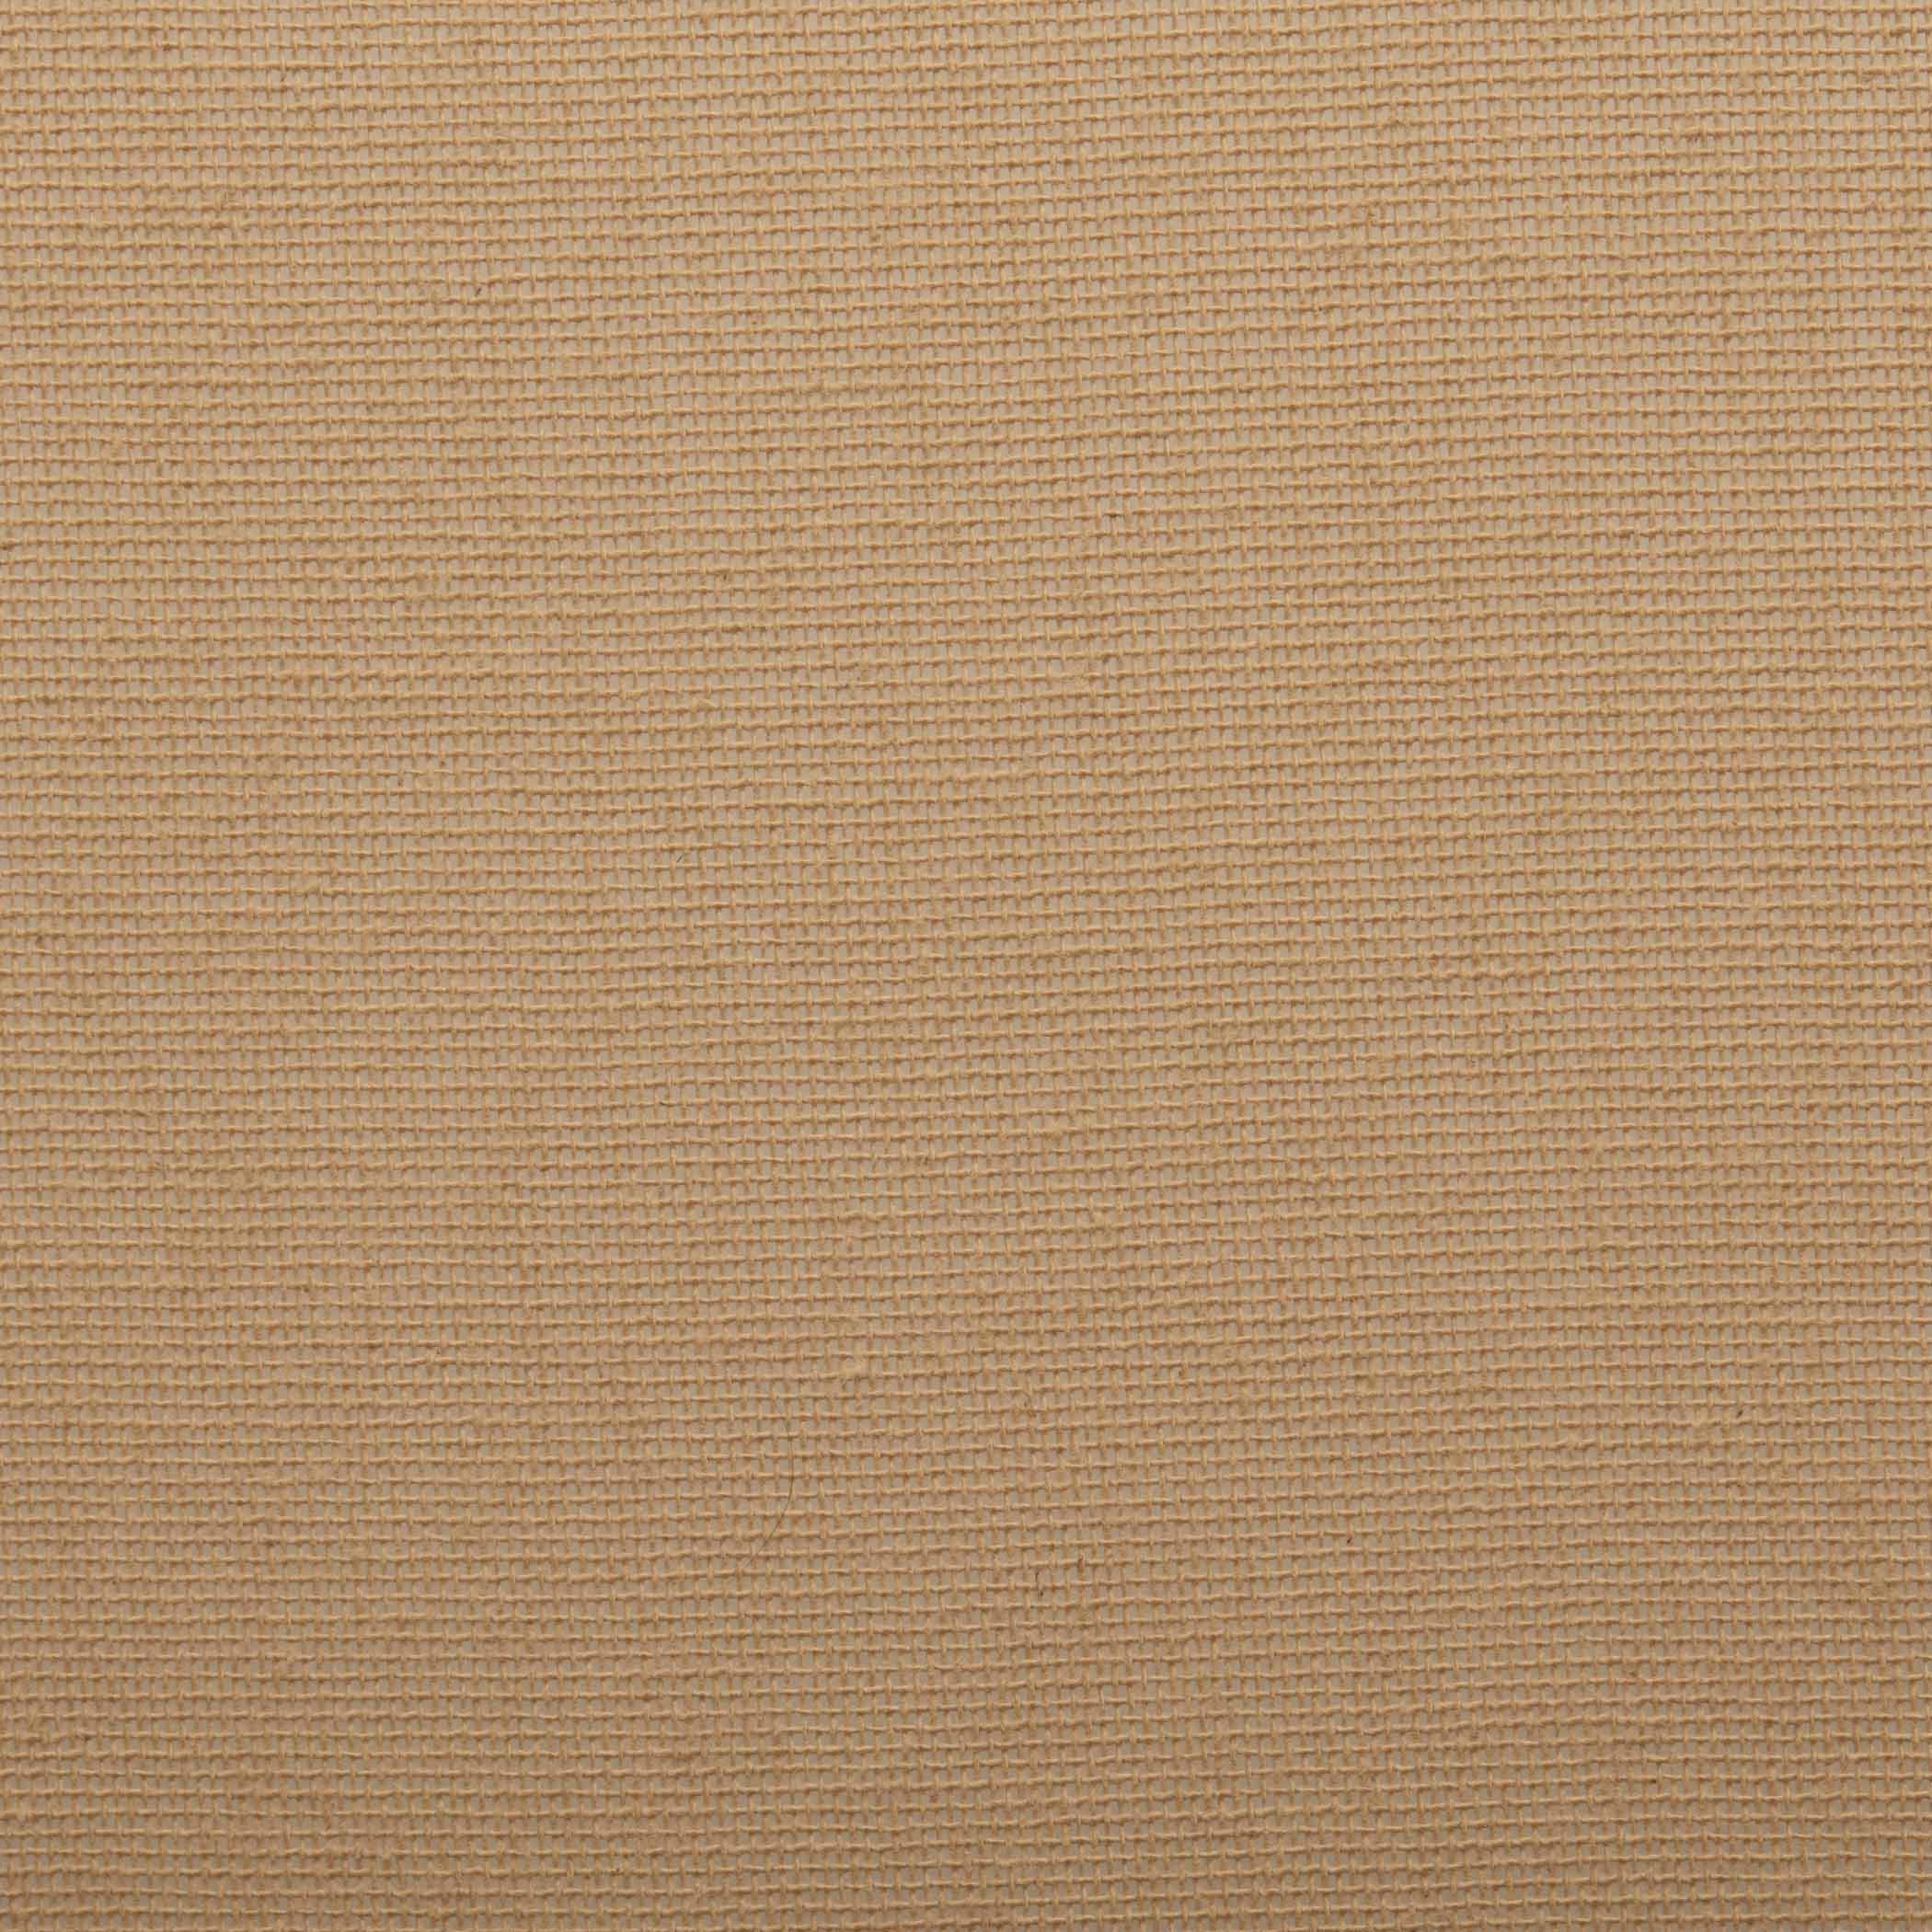 Tobacco Cloth Khaki Prairie Short Panel Fringed Set of 2 63x36x18